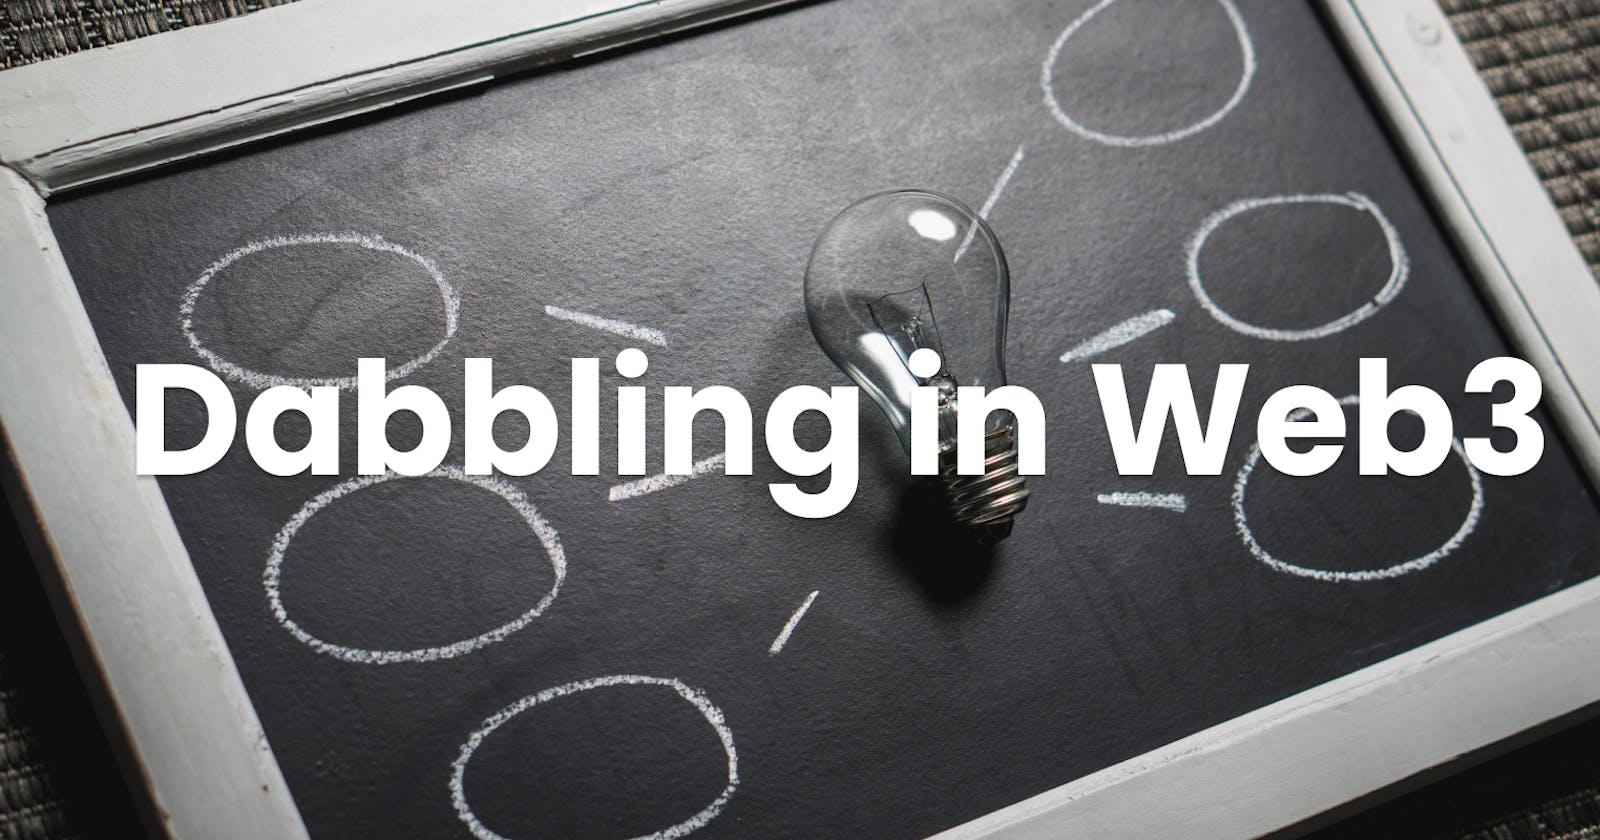 Dabbling in web3